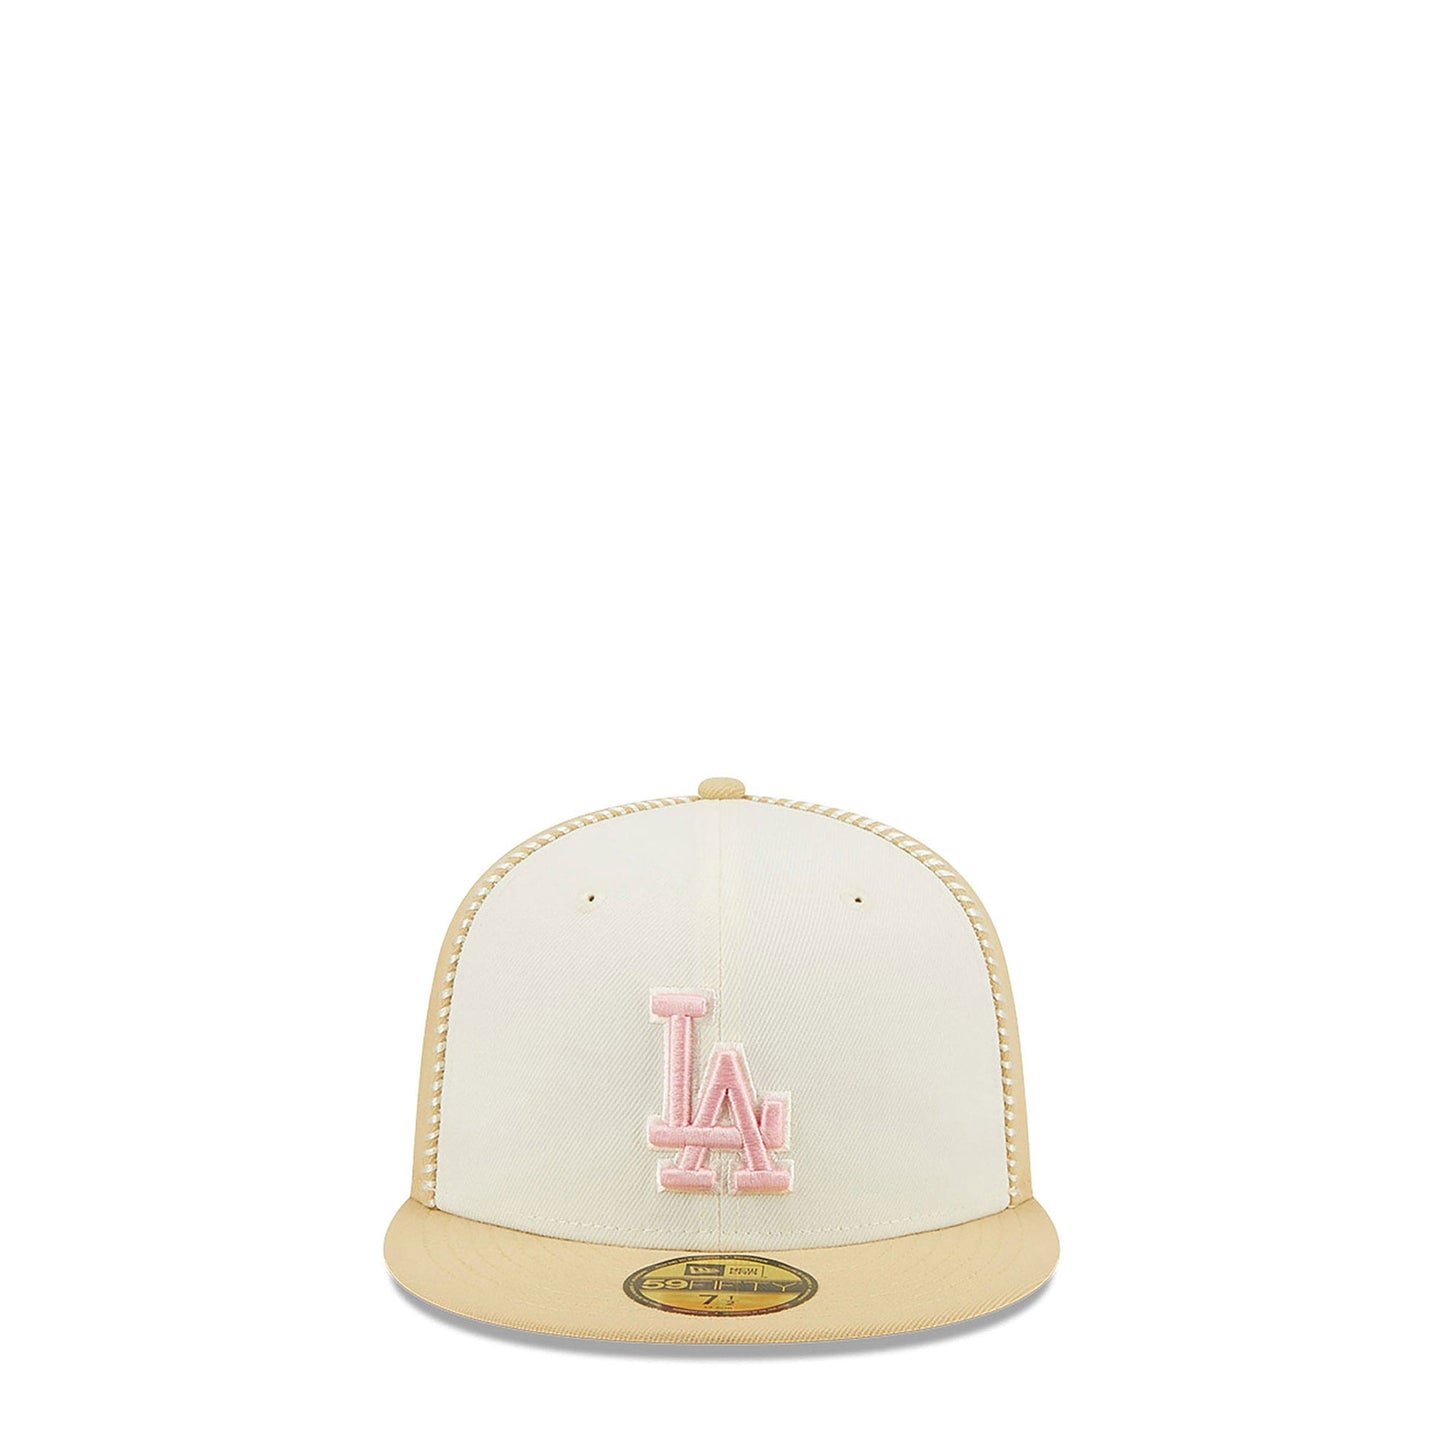 New Era Headwear 59FIFTY LOS ANGELES DODGERS SEAM STITCH FITTED CAP